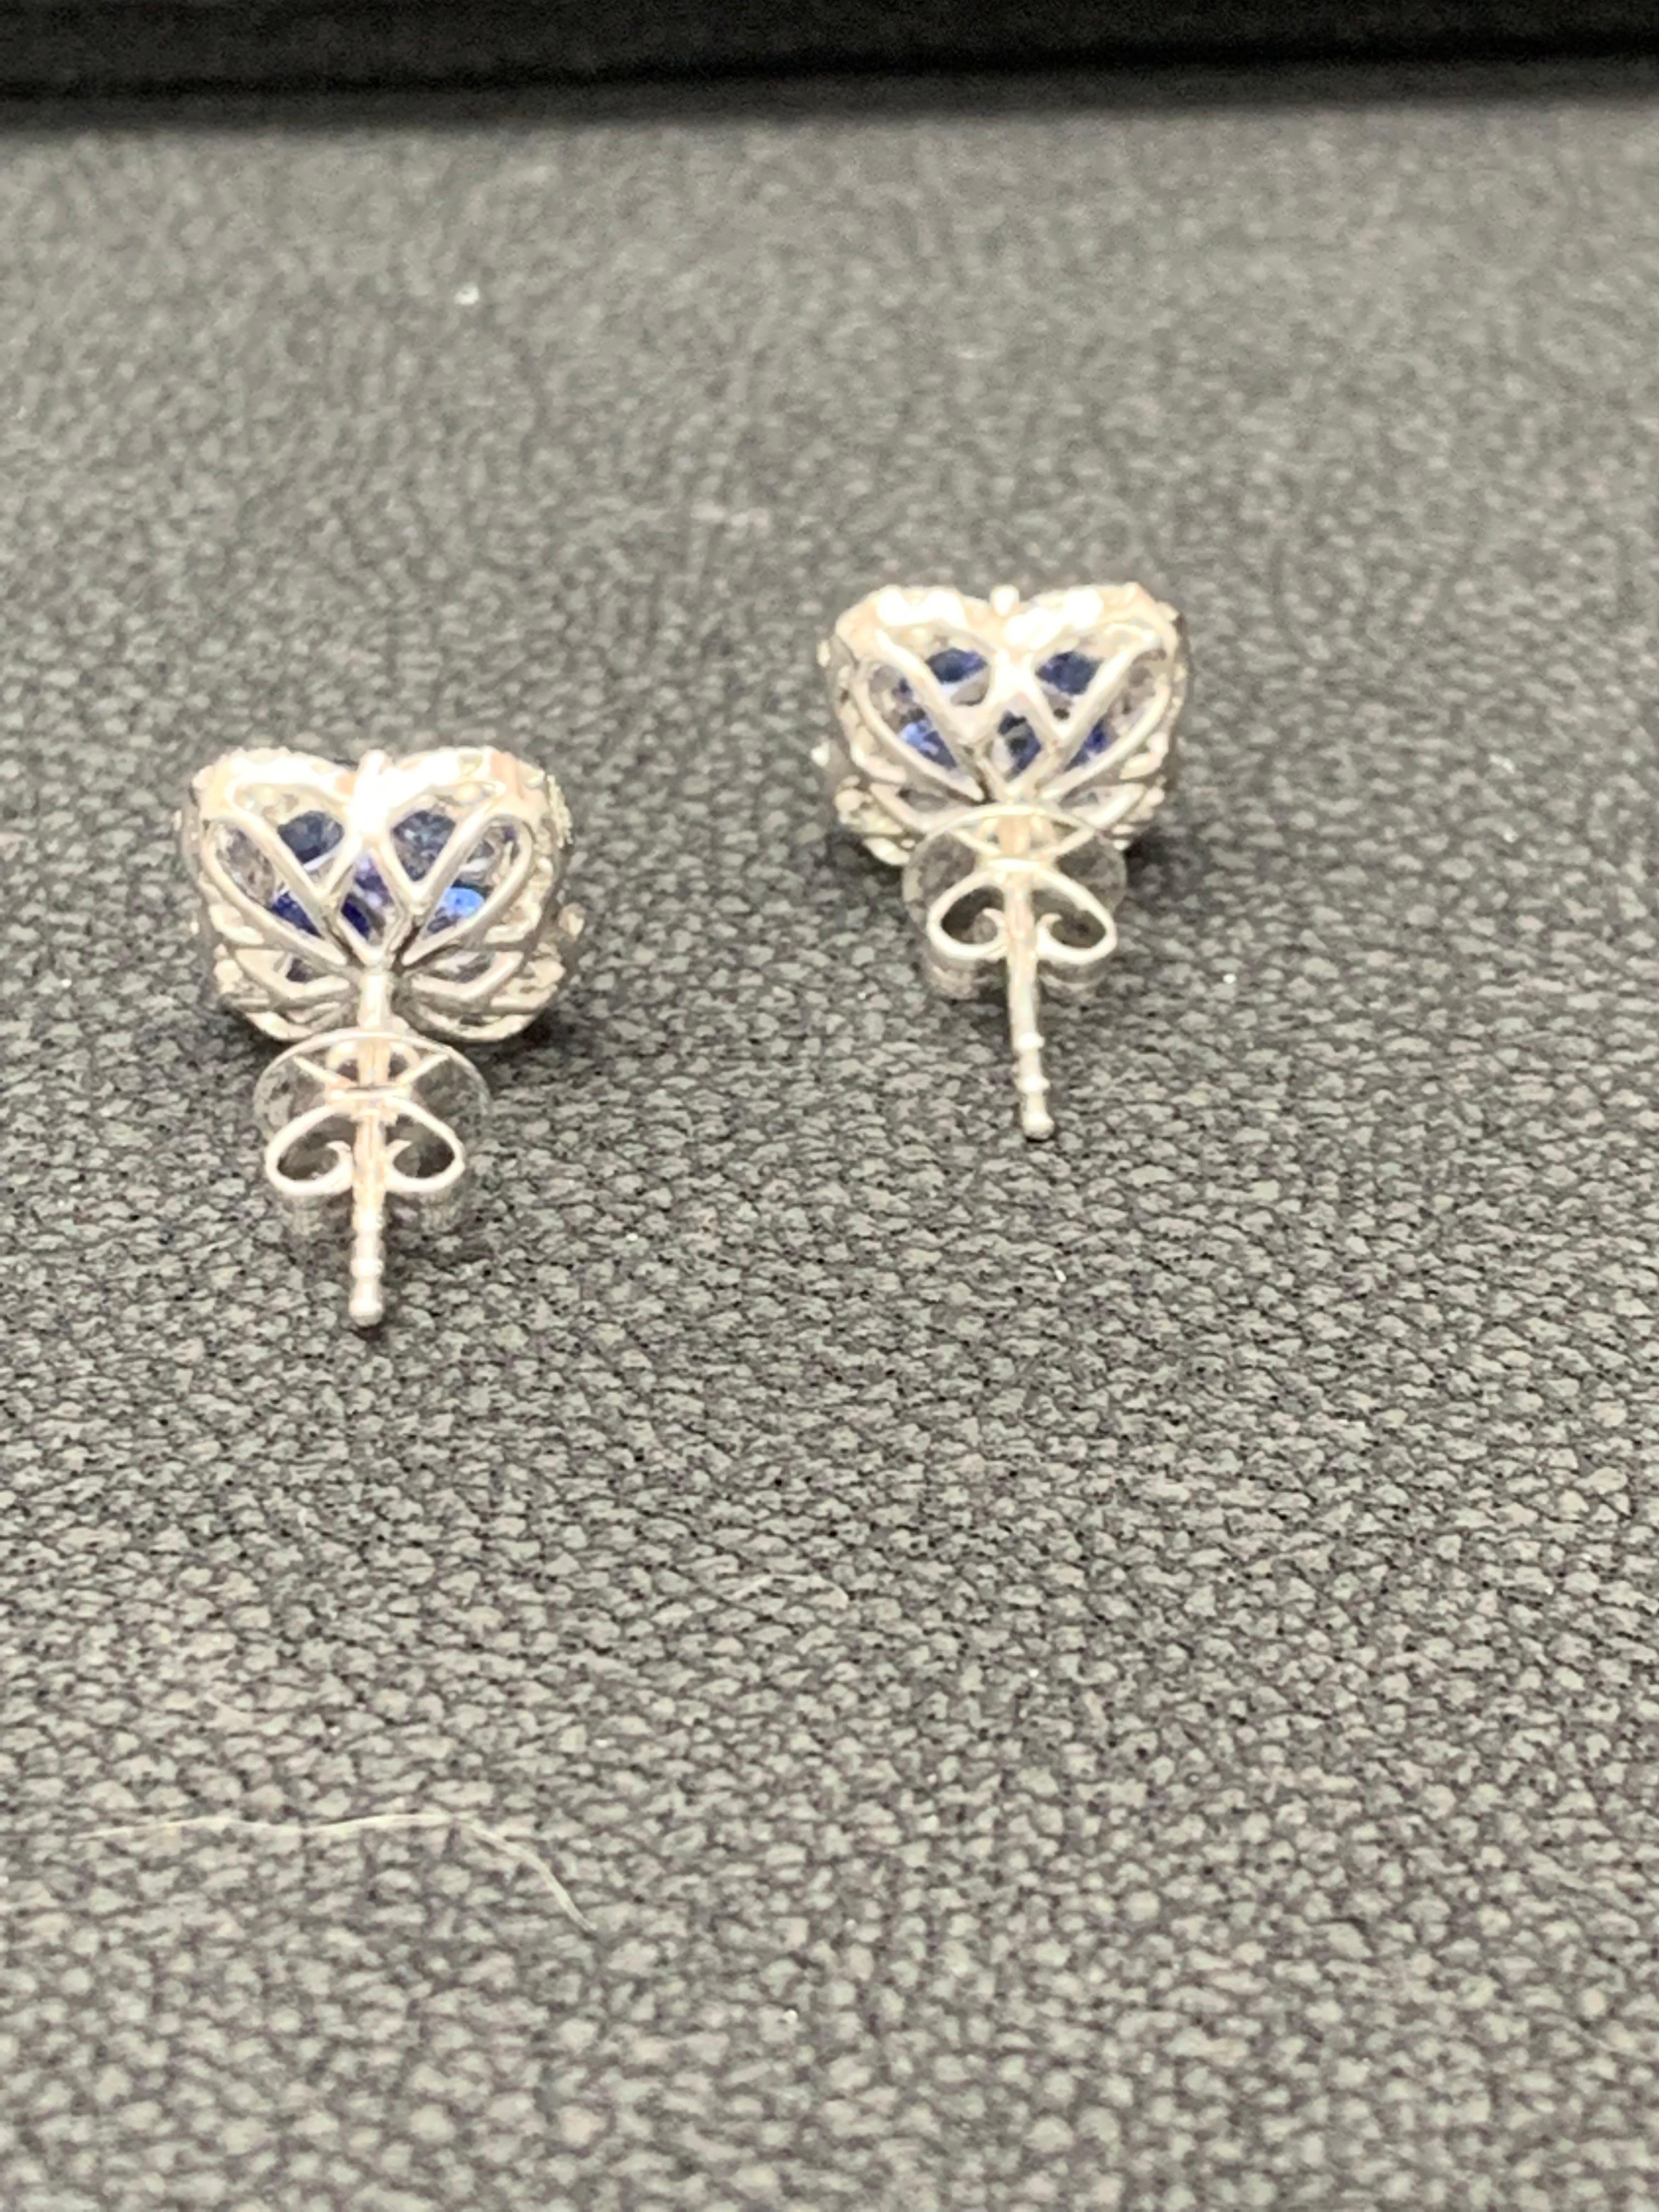 Women's 1.85 Carat Oval Cut Blue Sapphire and Diamond Stud Earrings in 18K White Gold